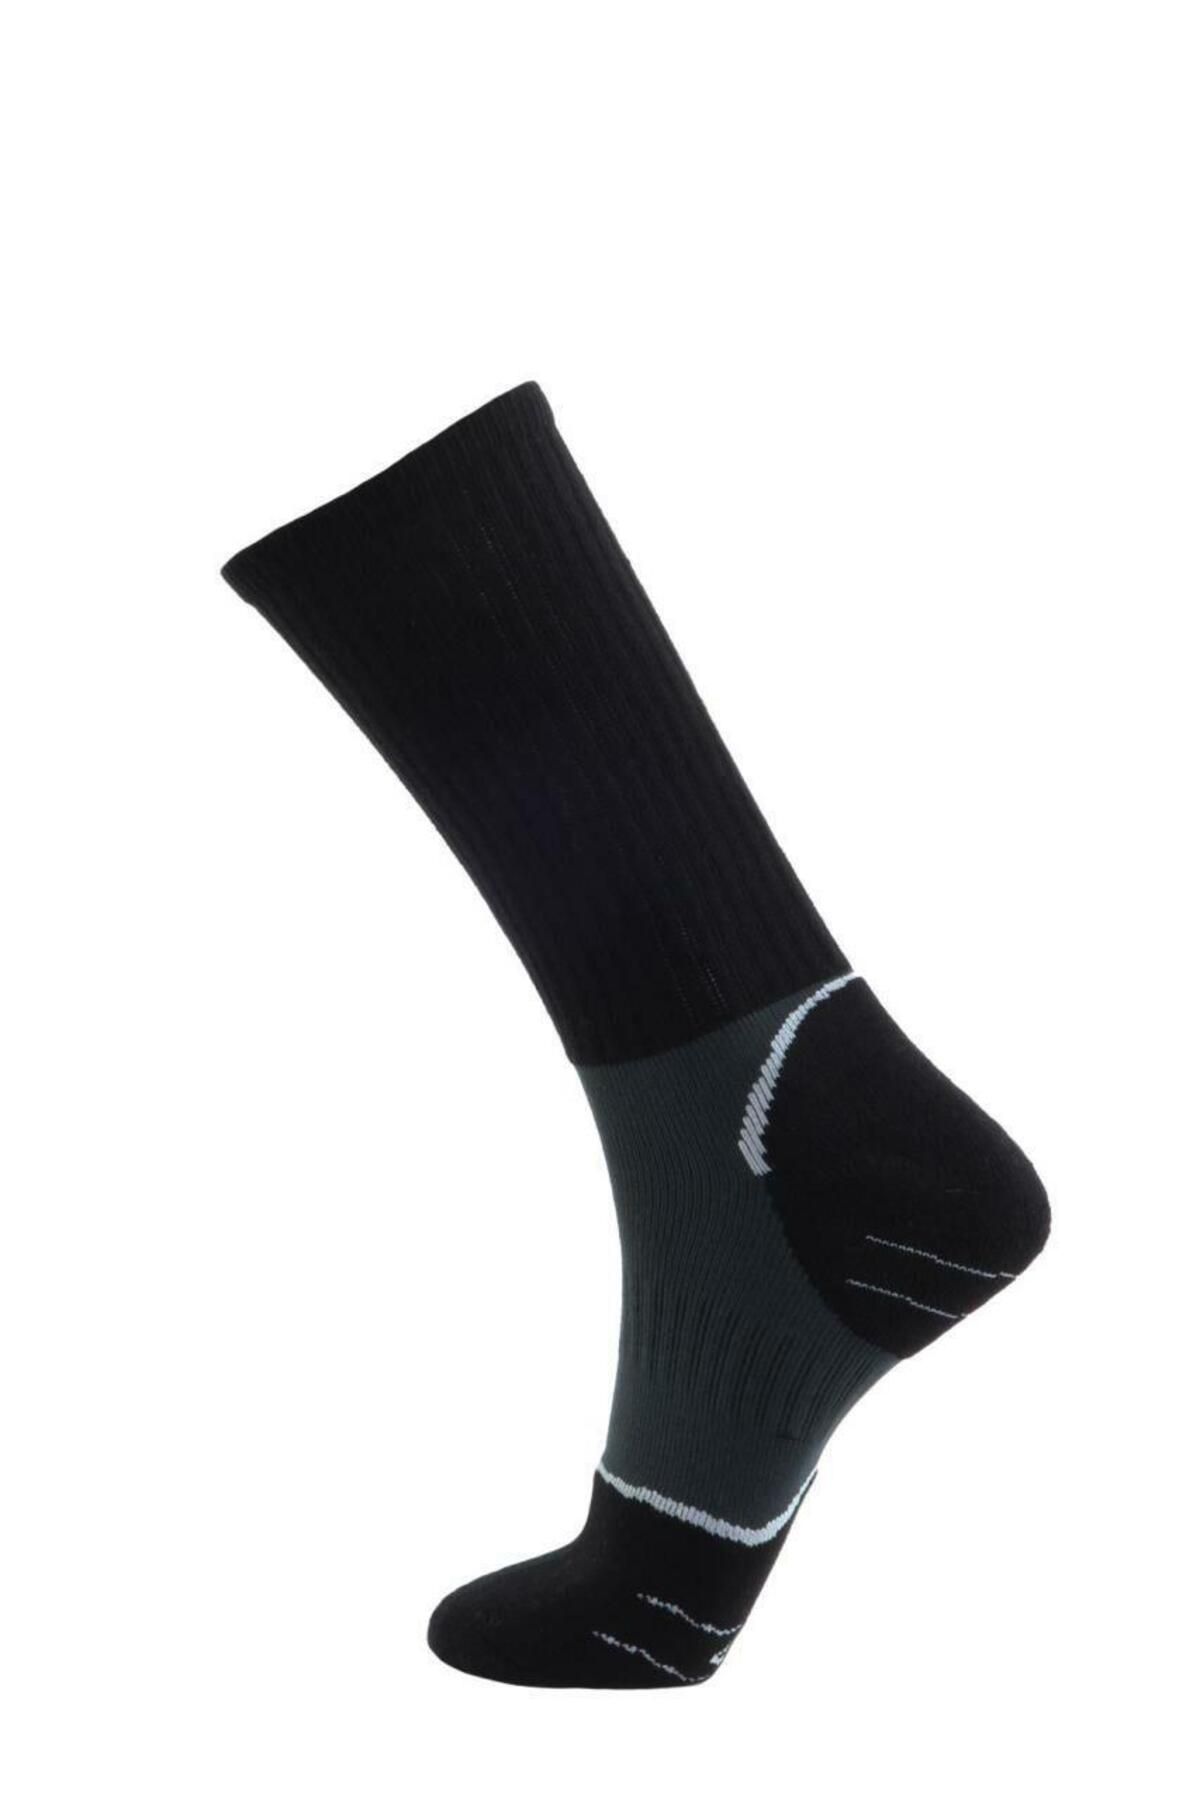 Panthzer Casual Sport Çorap Siyah/gri